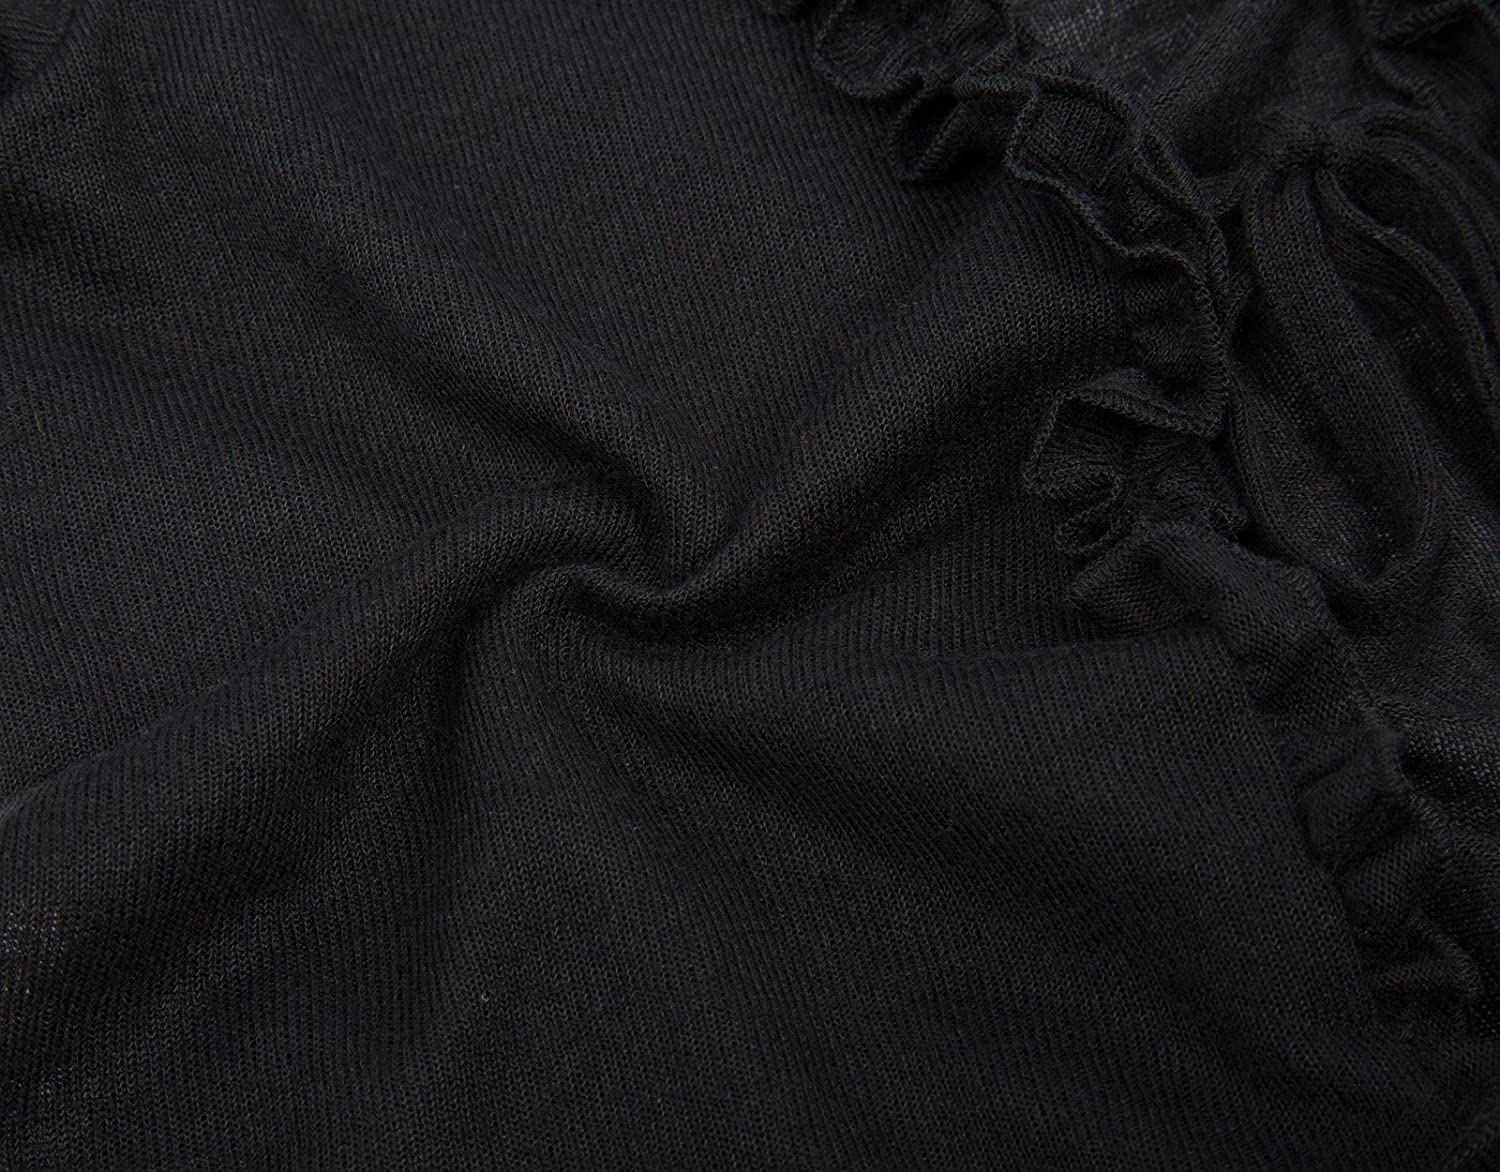 KATE KASIN LIGHTWEIGHT Shrug Bolero for Women Ruffle Cropped Knit Cardigan  - $27.83 | PicClick